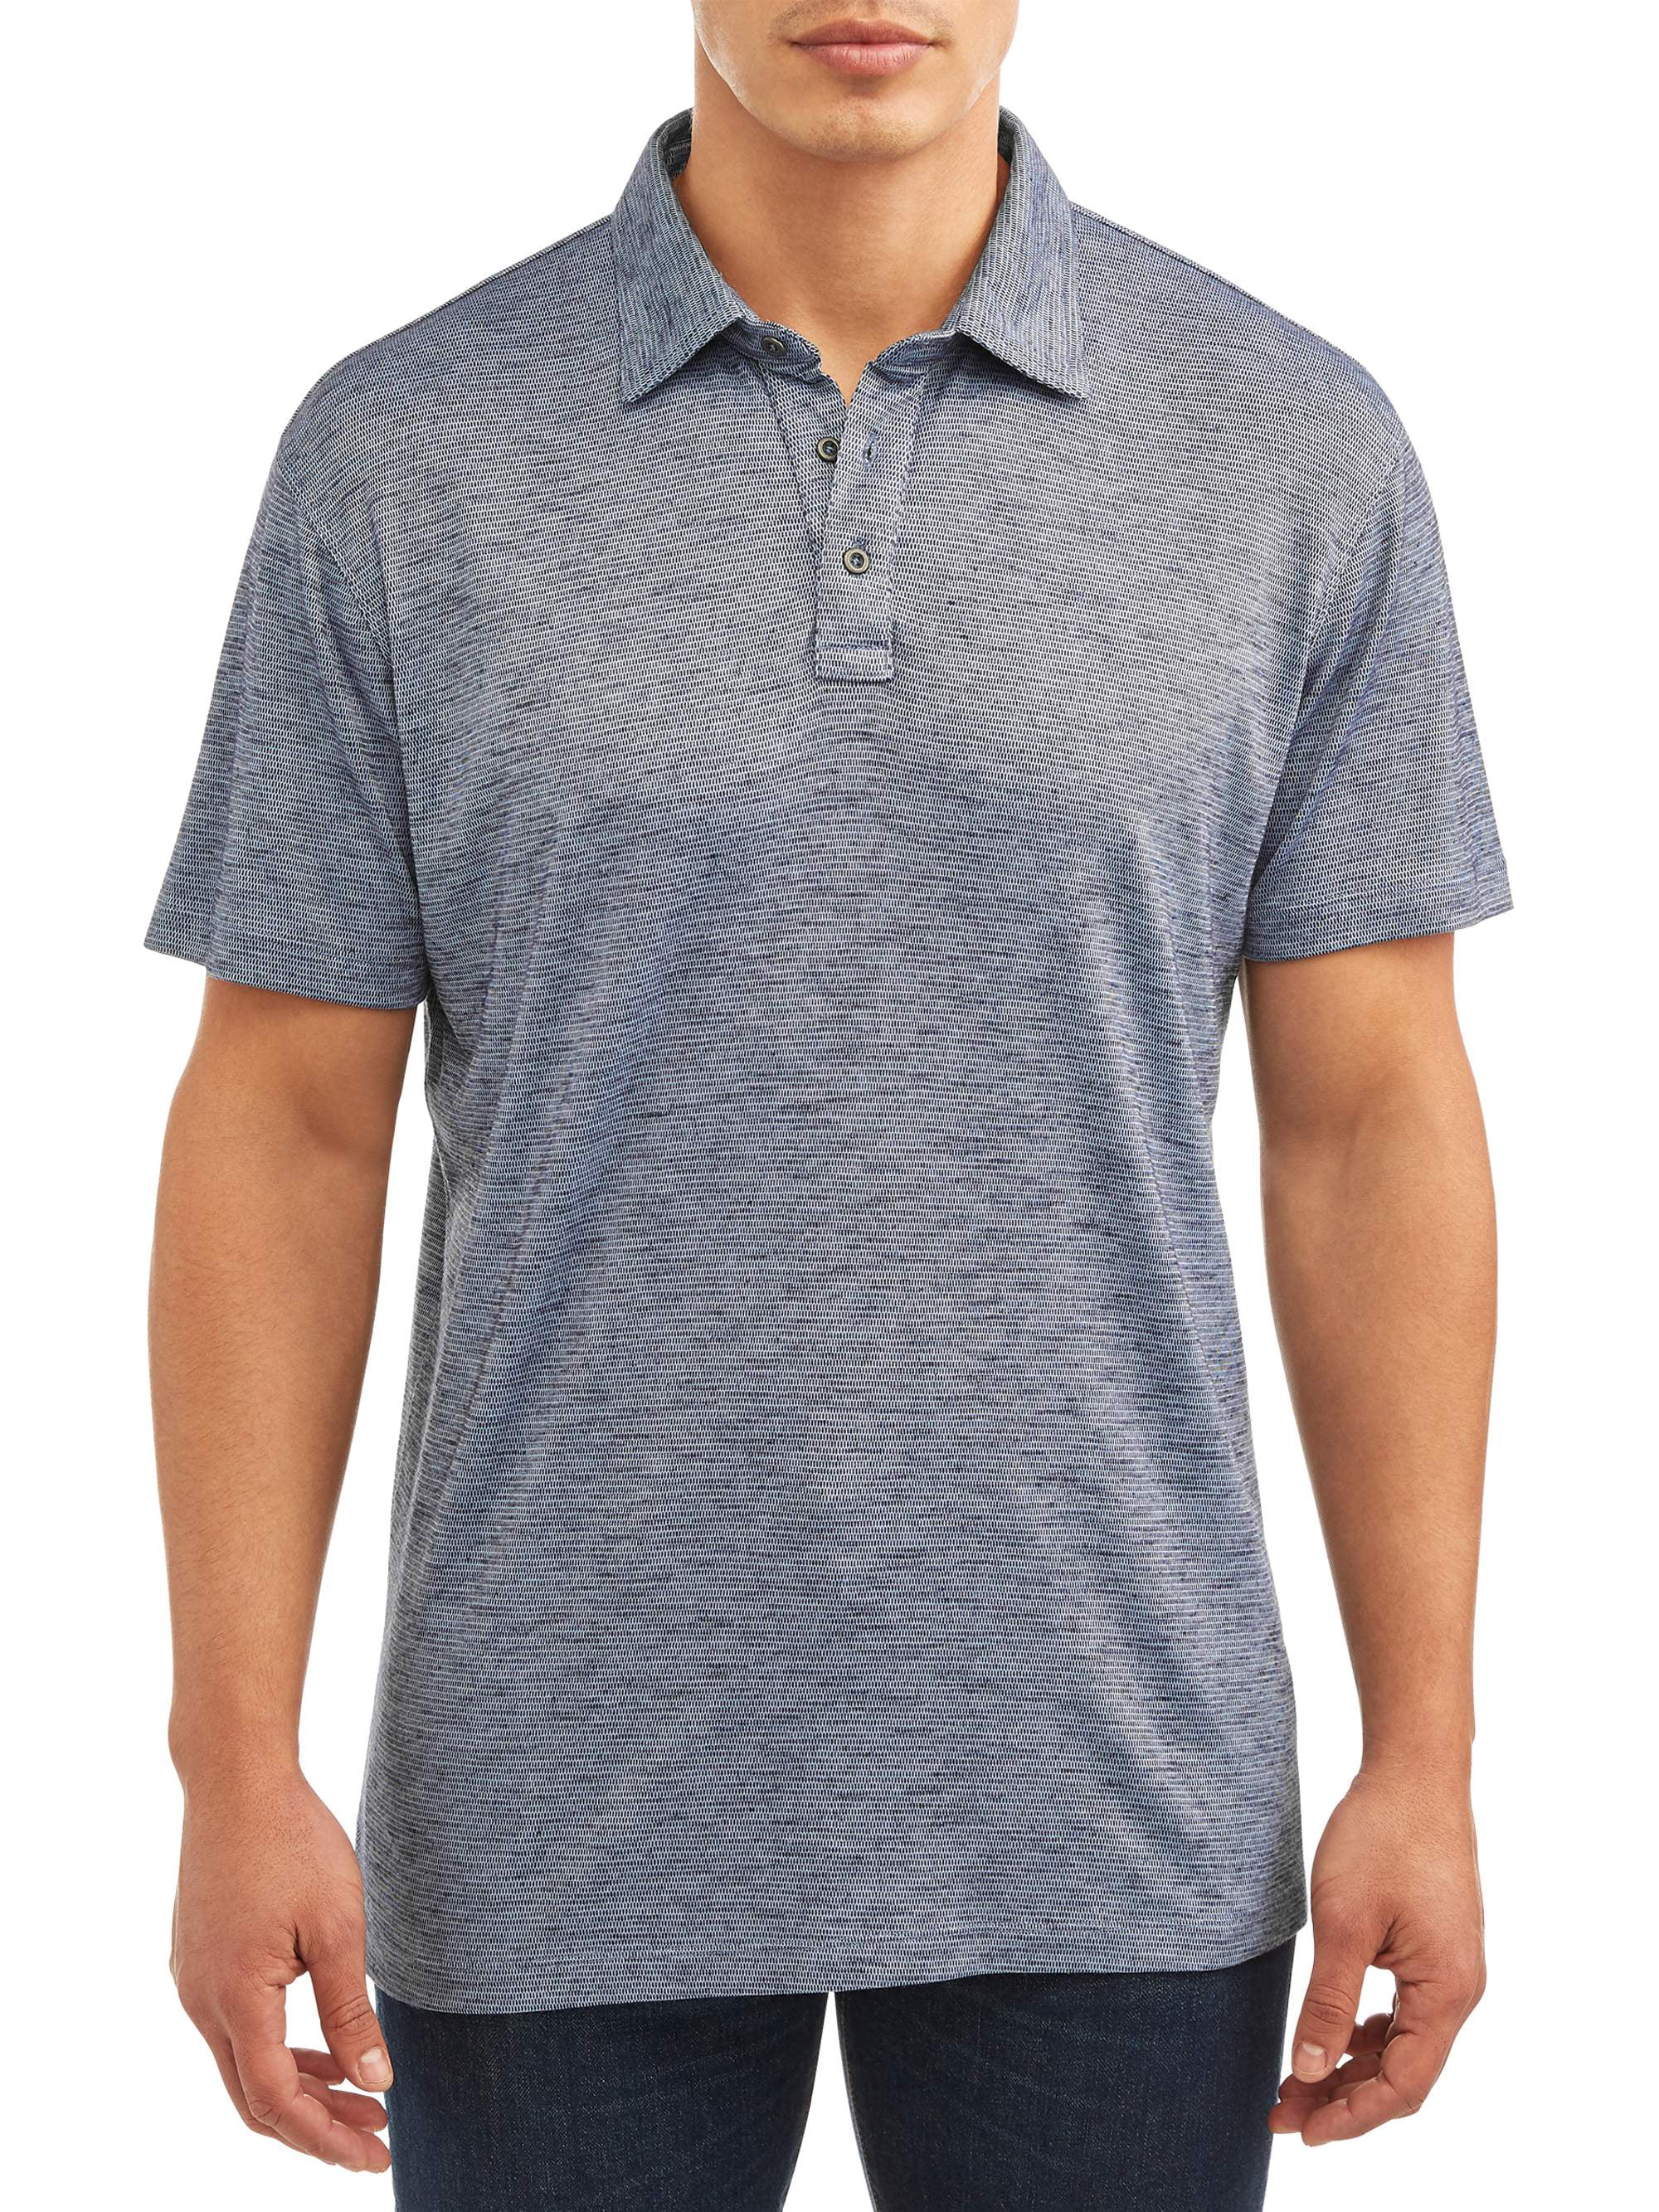 Lee Men's Short Sleeve Textured Poly Polo Shirt - Walmart.com